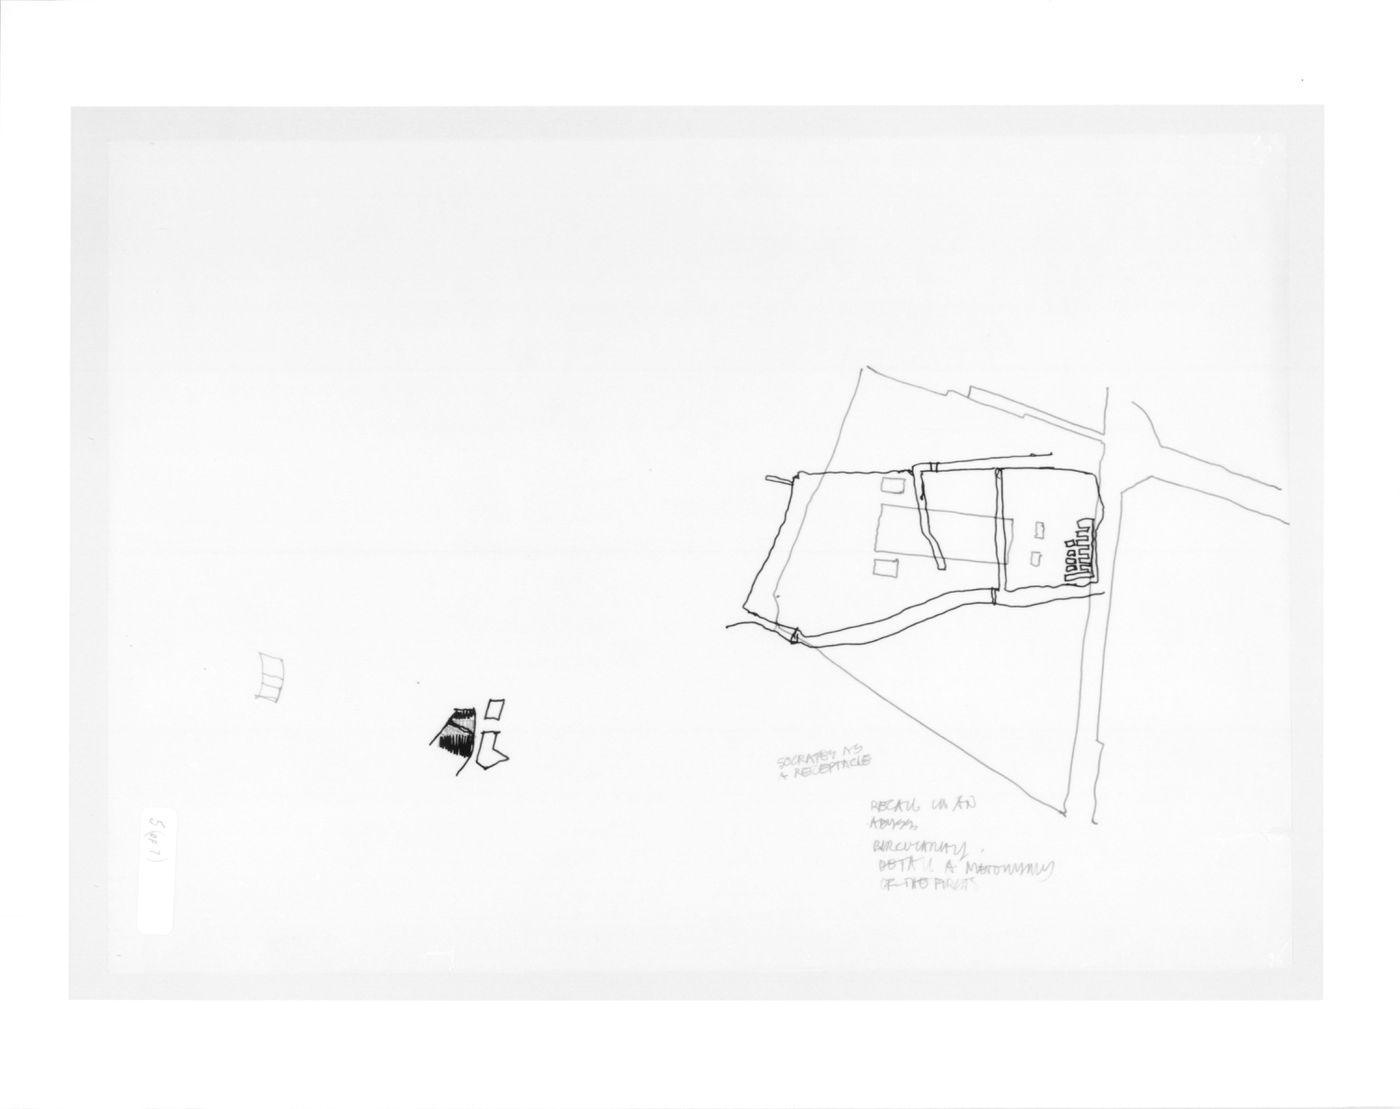 Sketch site plan showing superposition of Cannaregio site over La Villette site